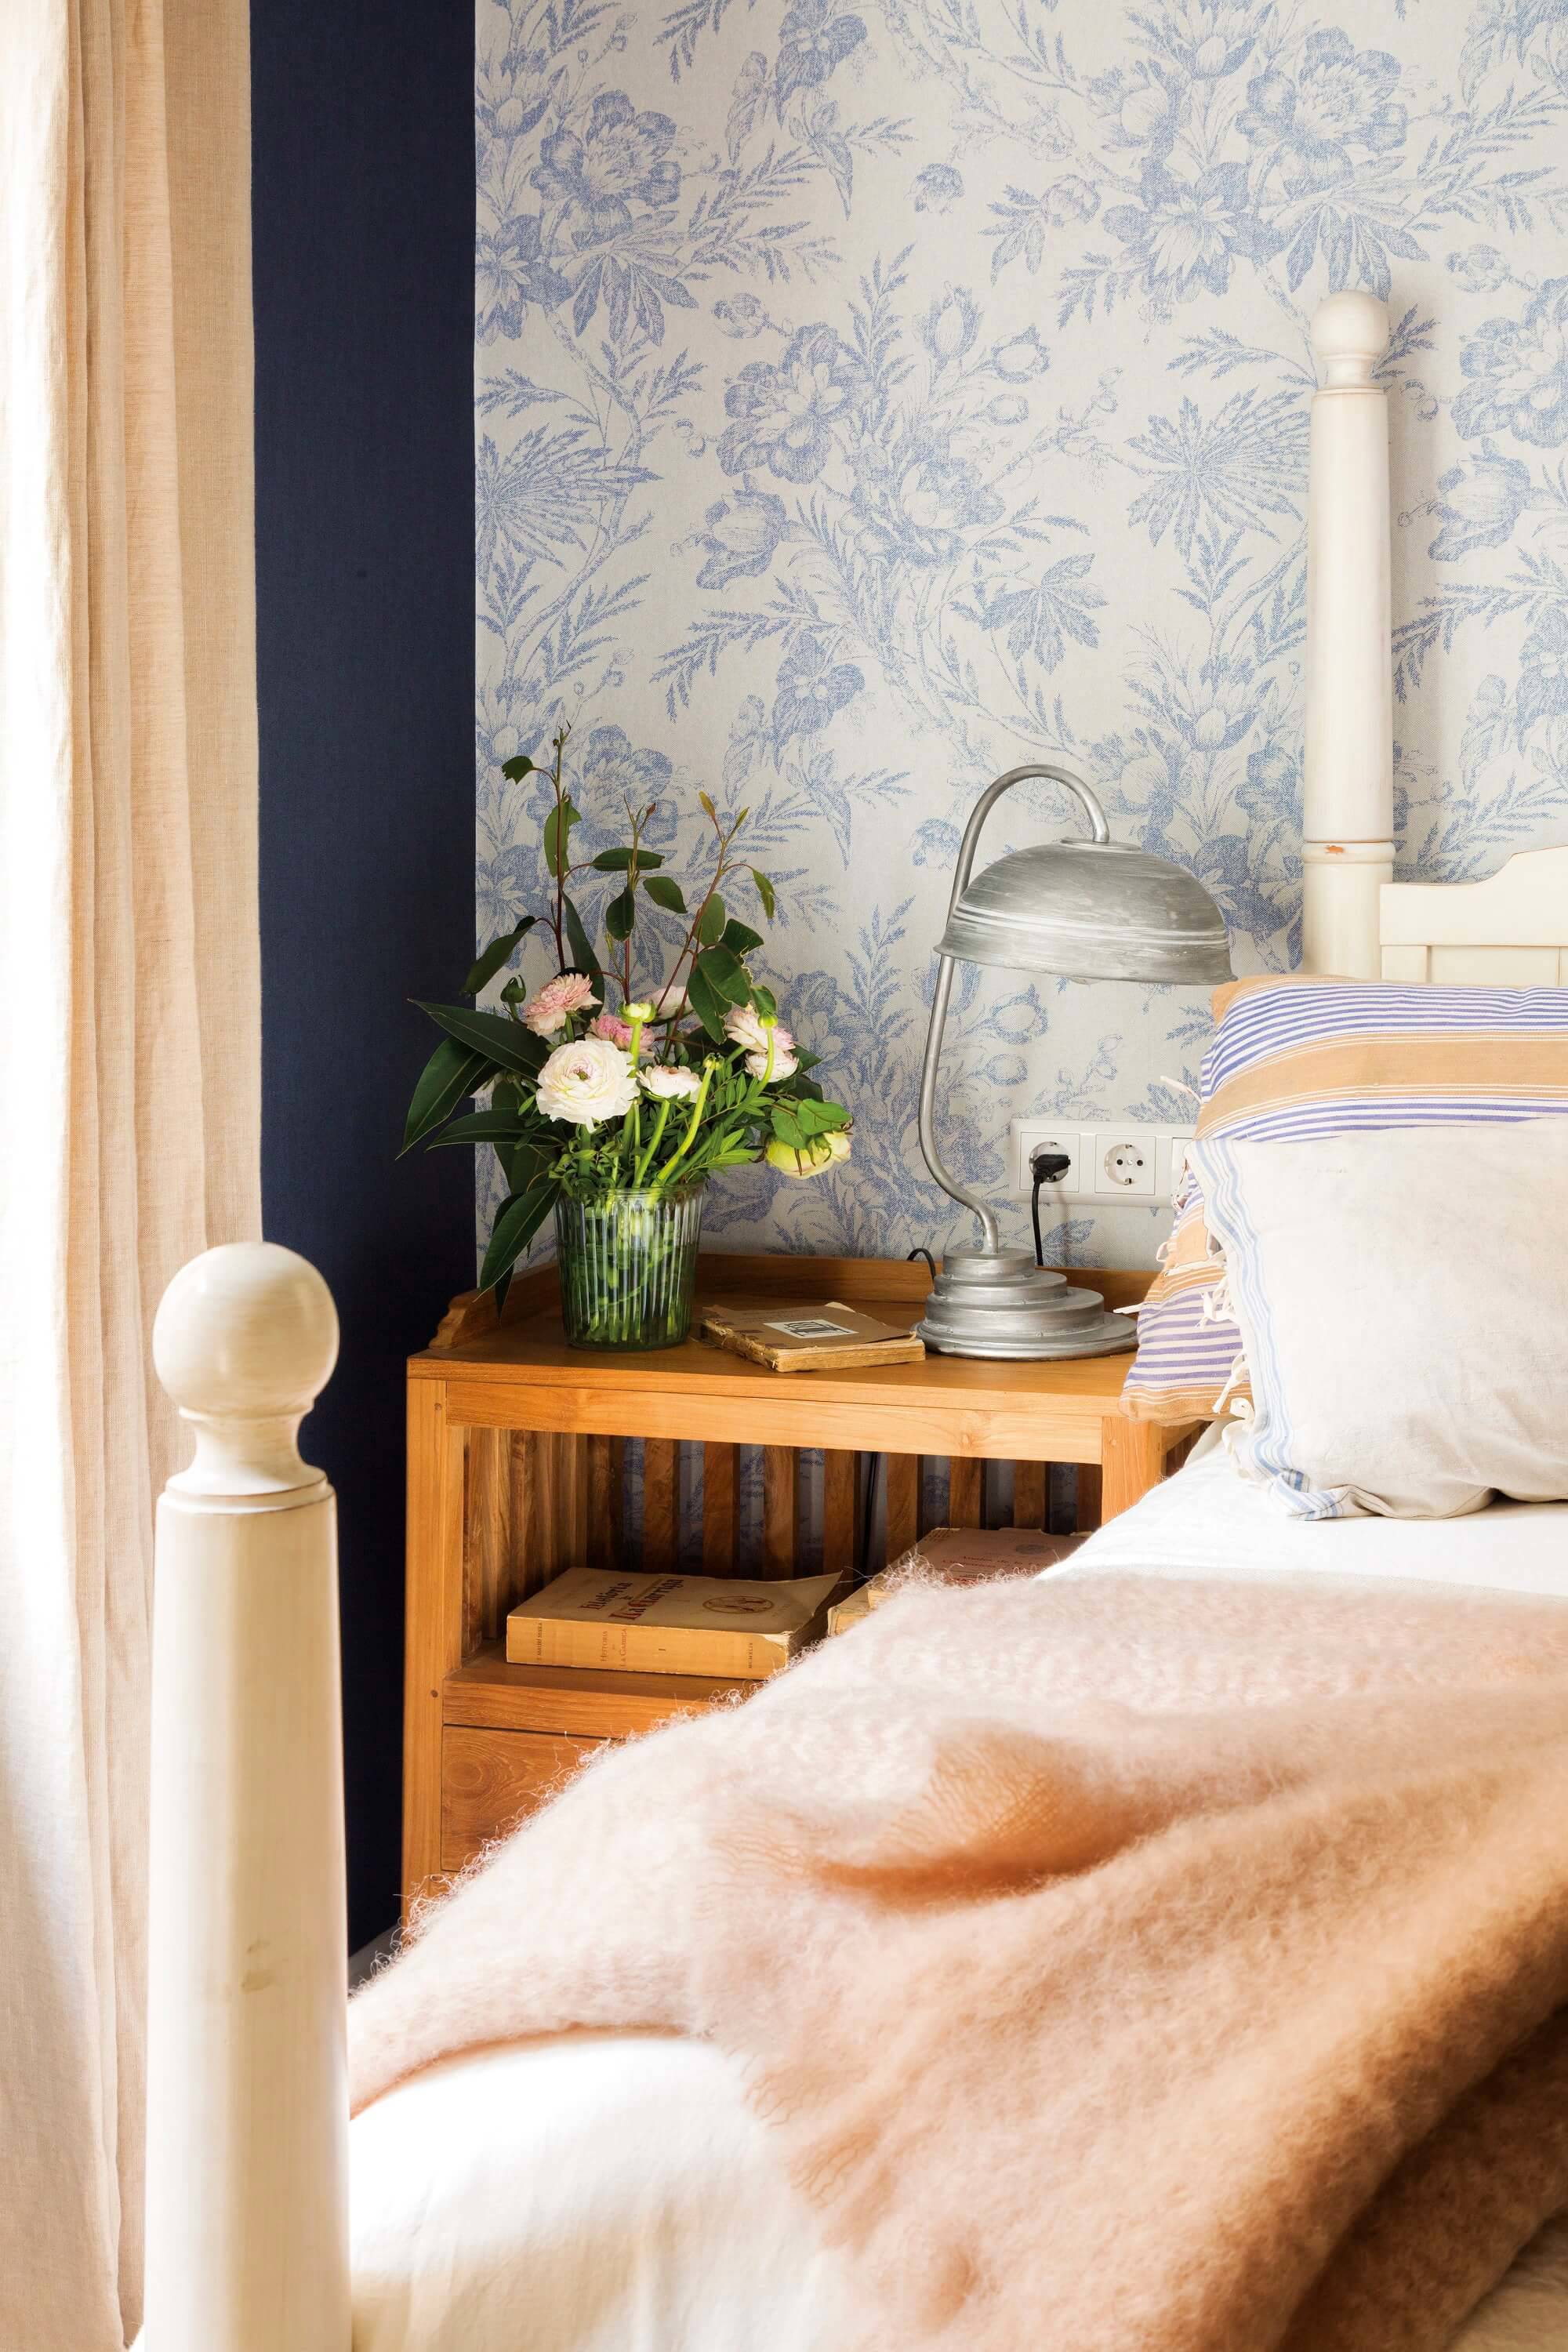 00451599 dormitorio con papel pintado floral azul